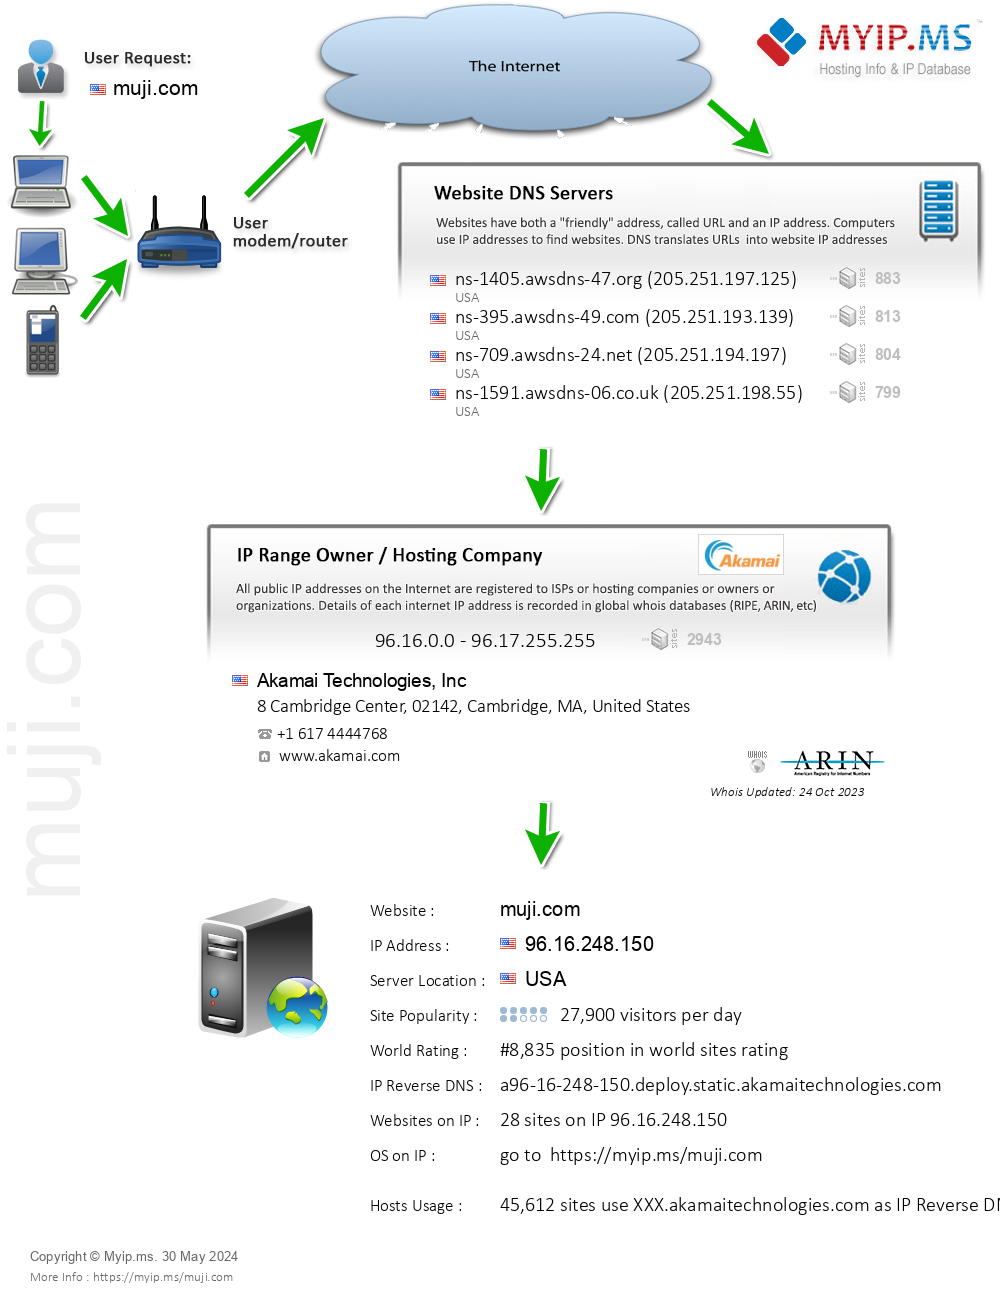 Muji.com - Website Hosting Visual IP Diagram